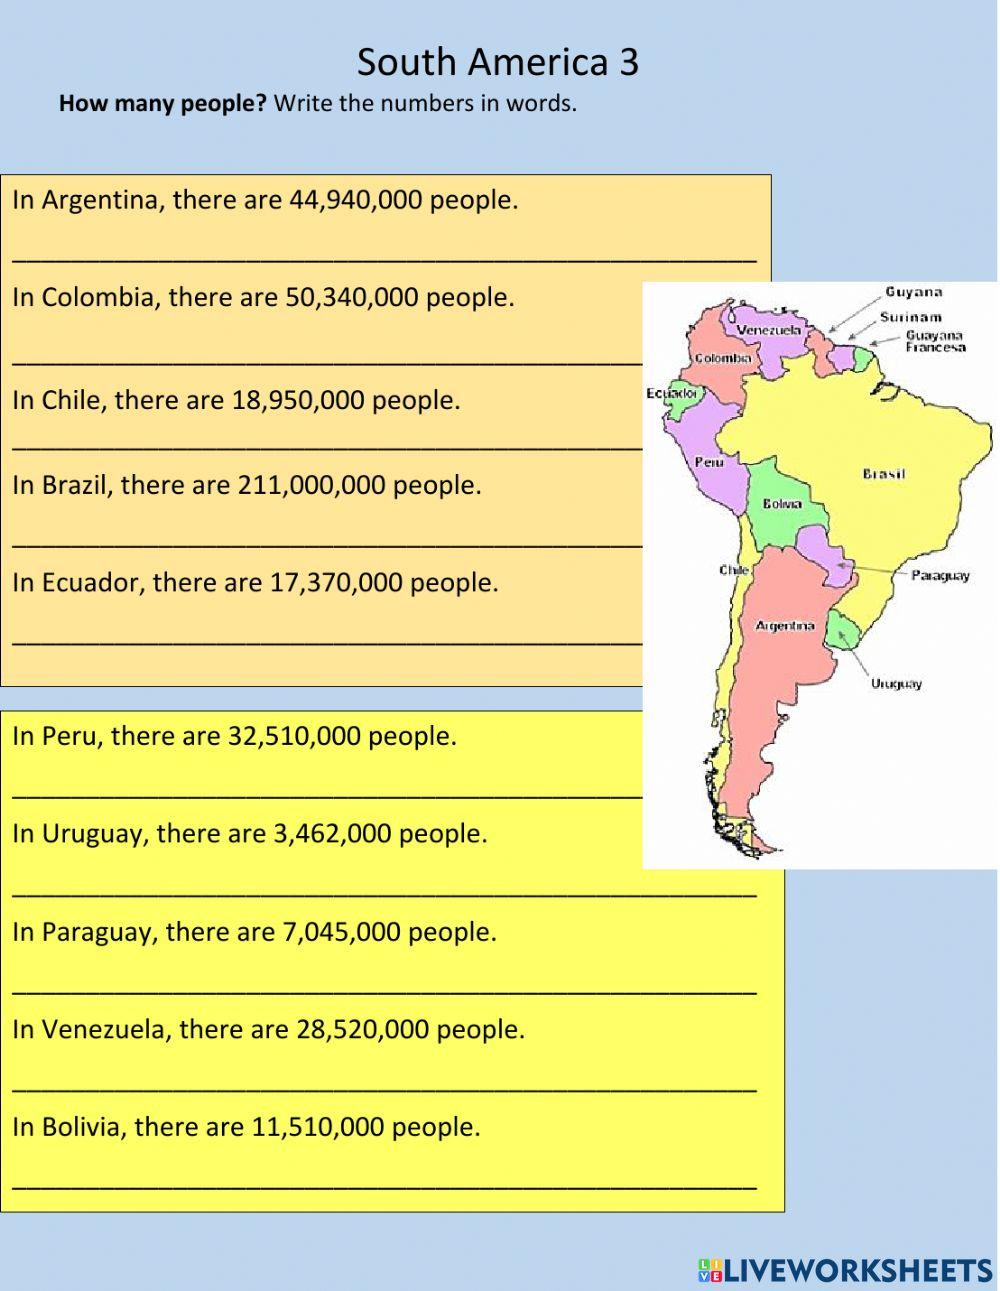 South America (population)